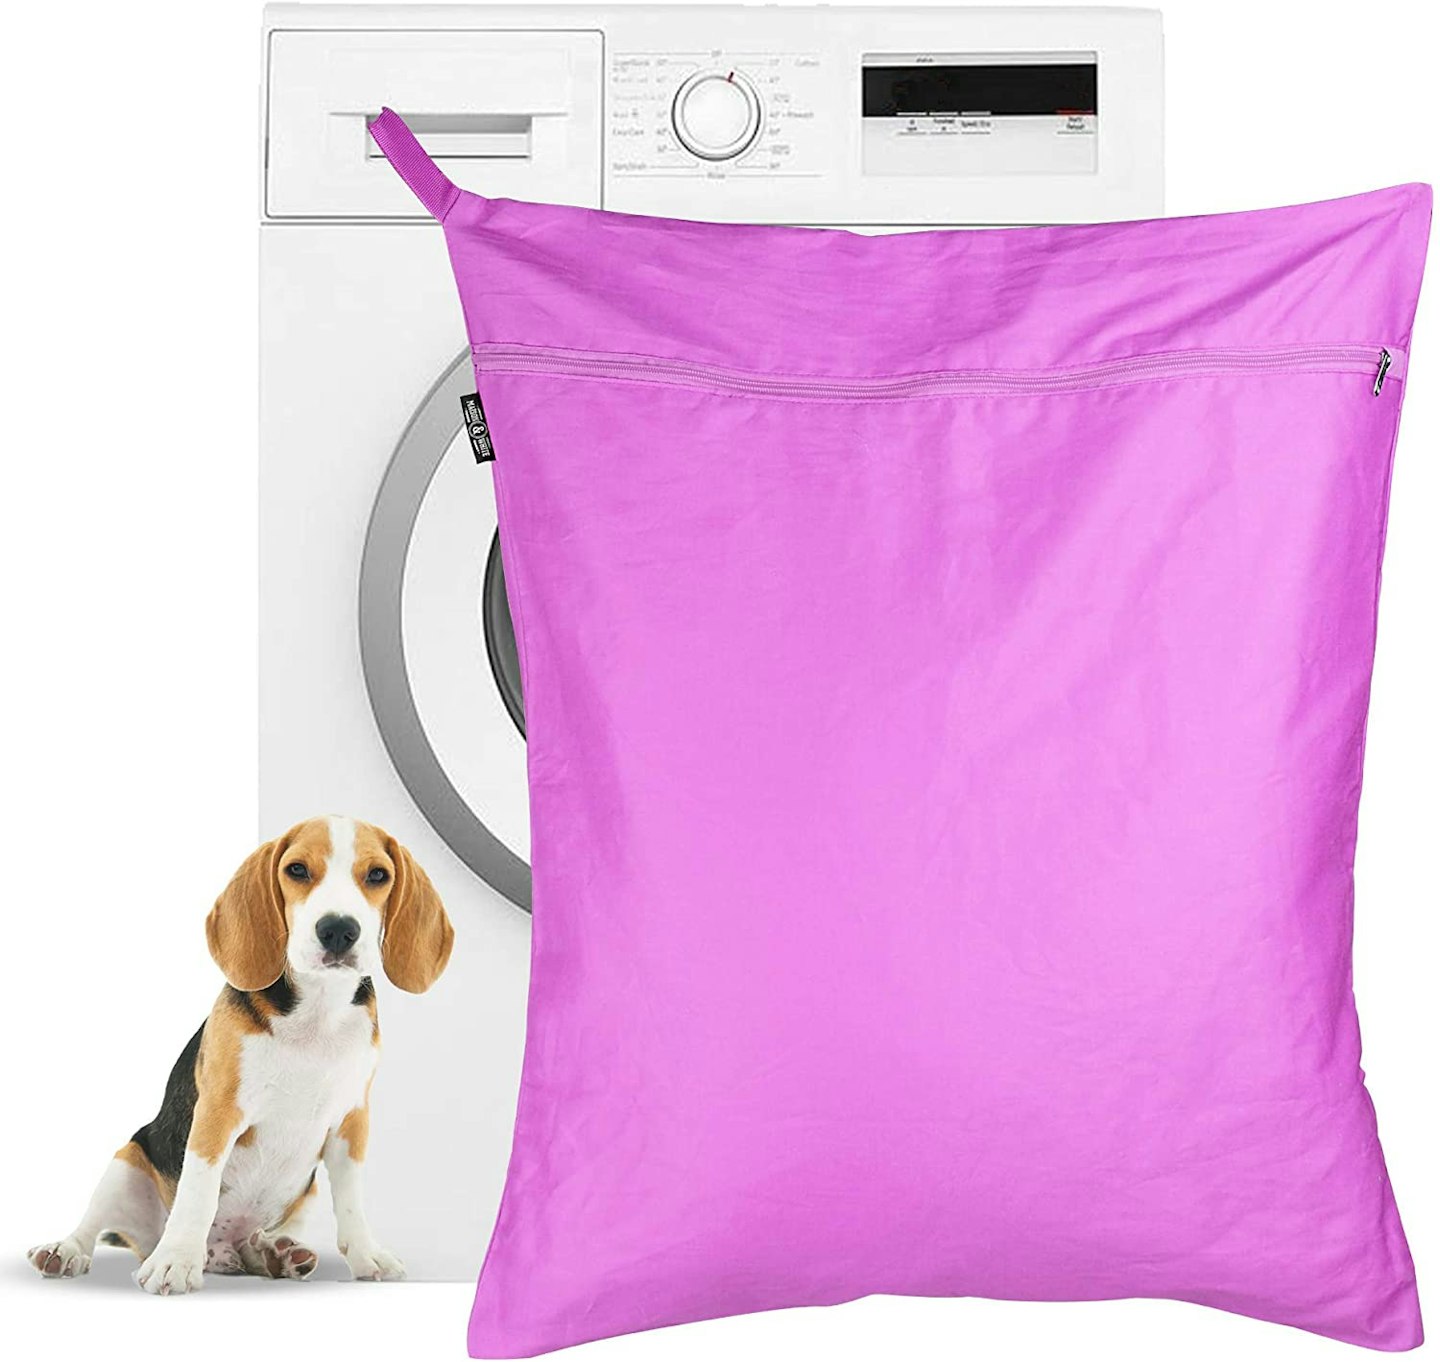 Aoliandatong Pet Laundry Bag